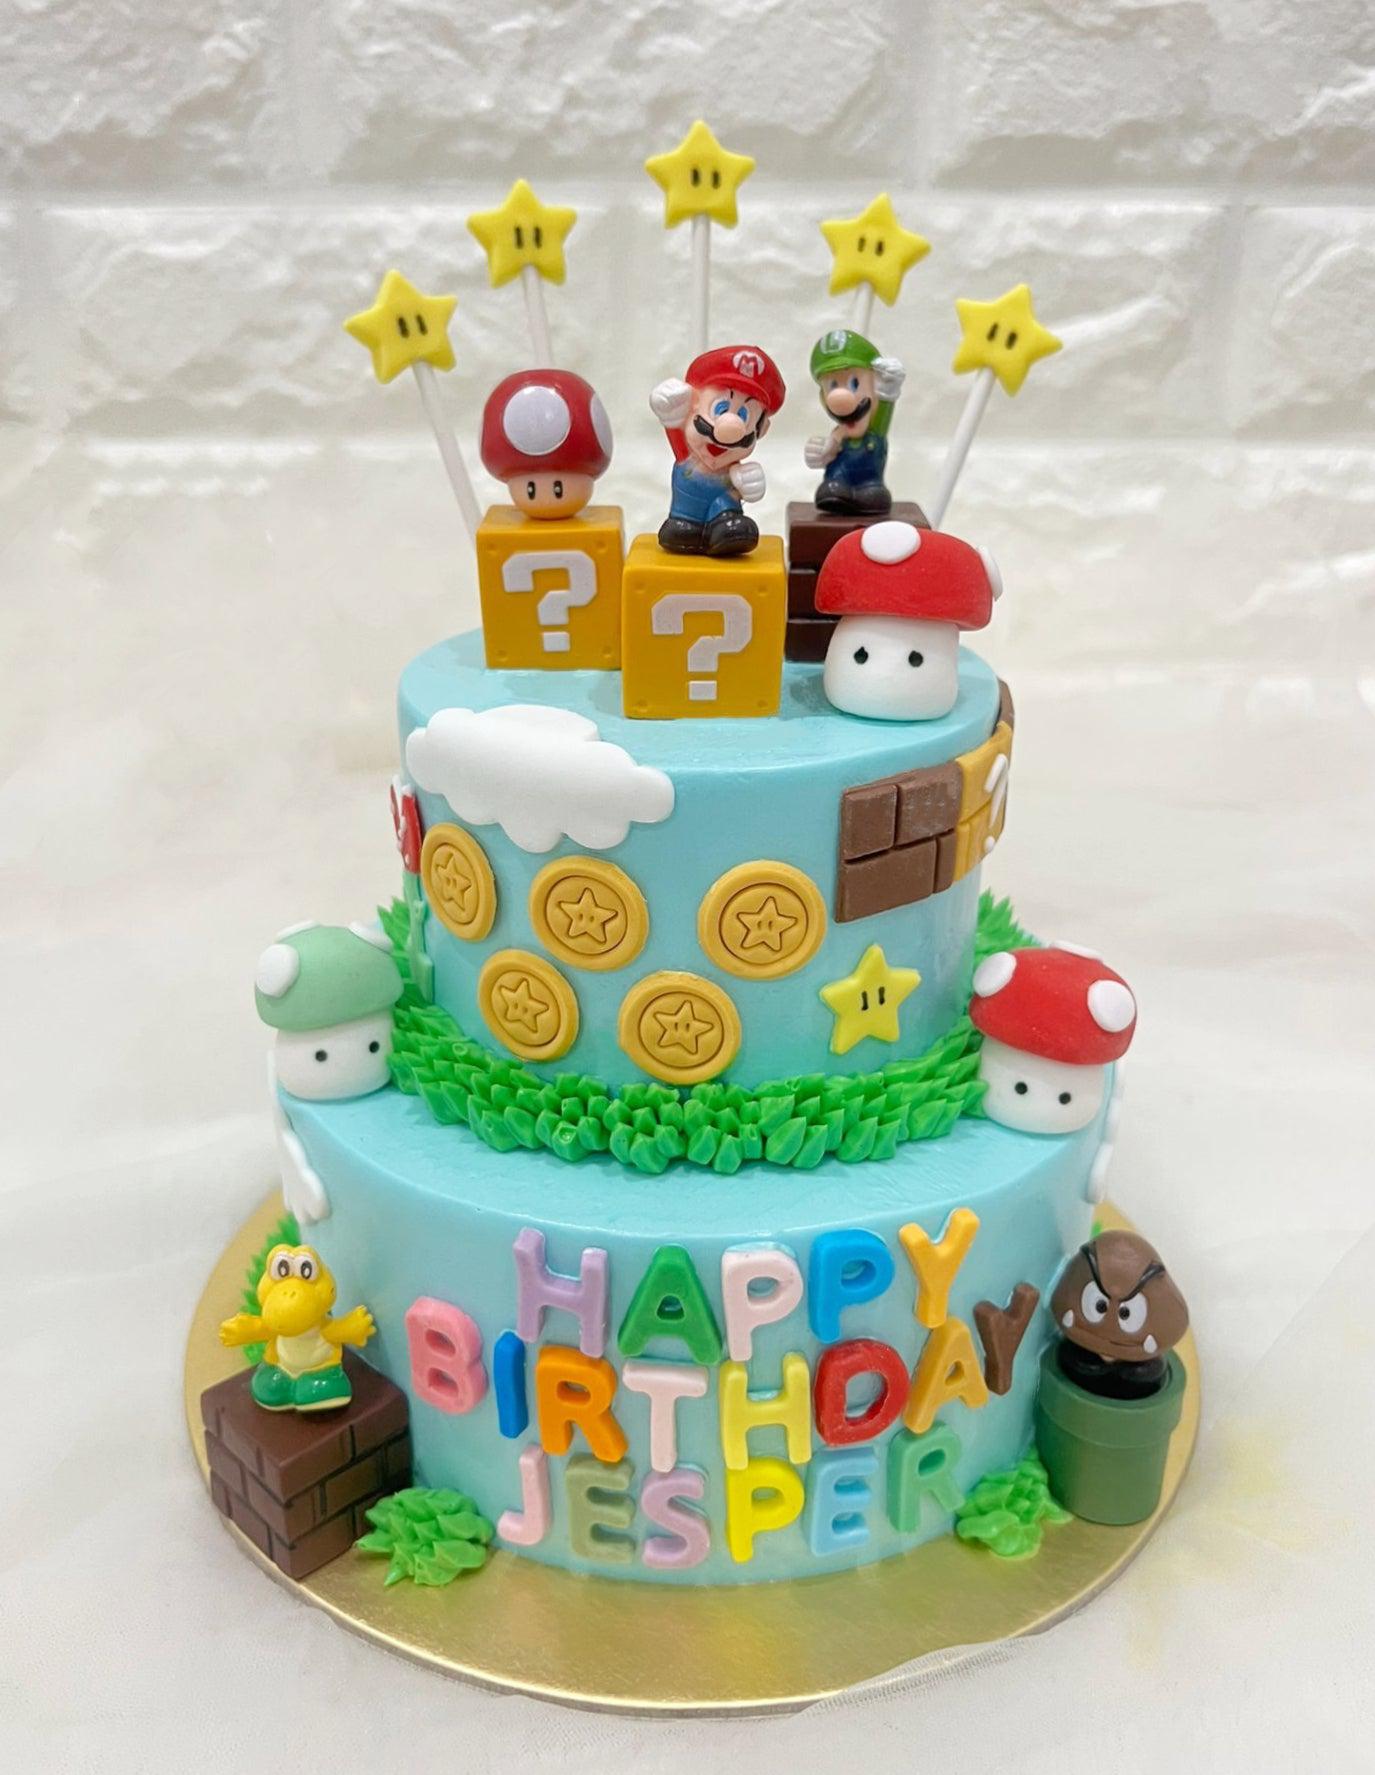 Mario Adventure cake singapore - River Ash Bakery